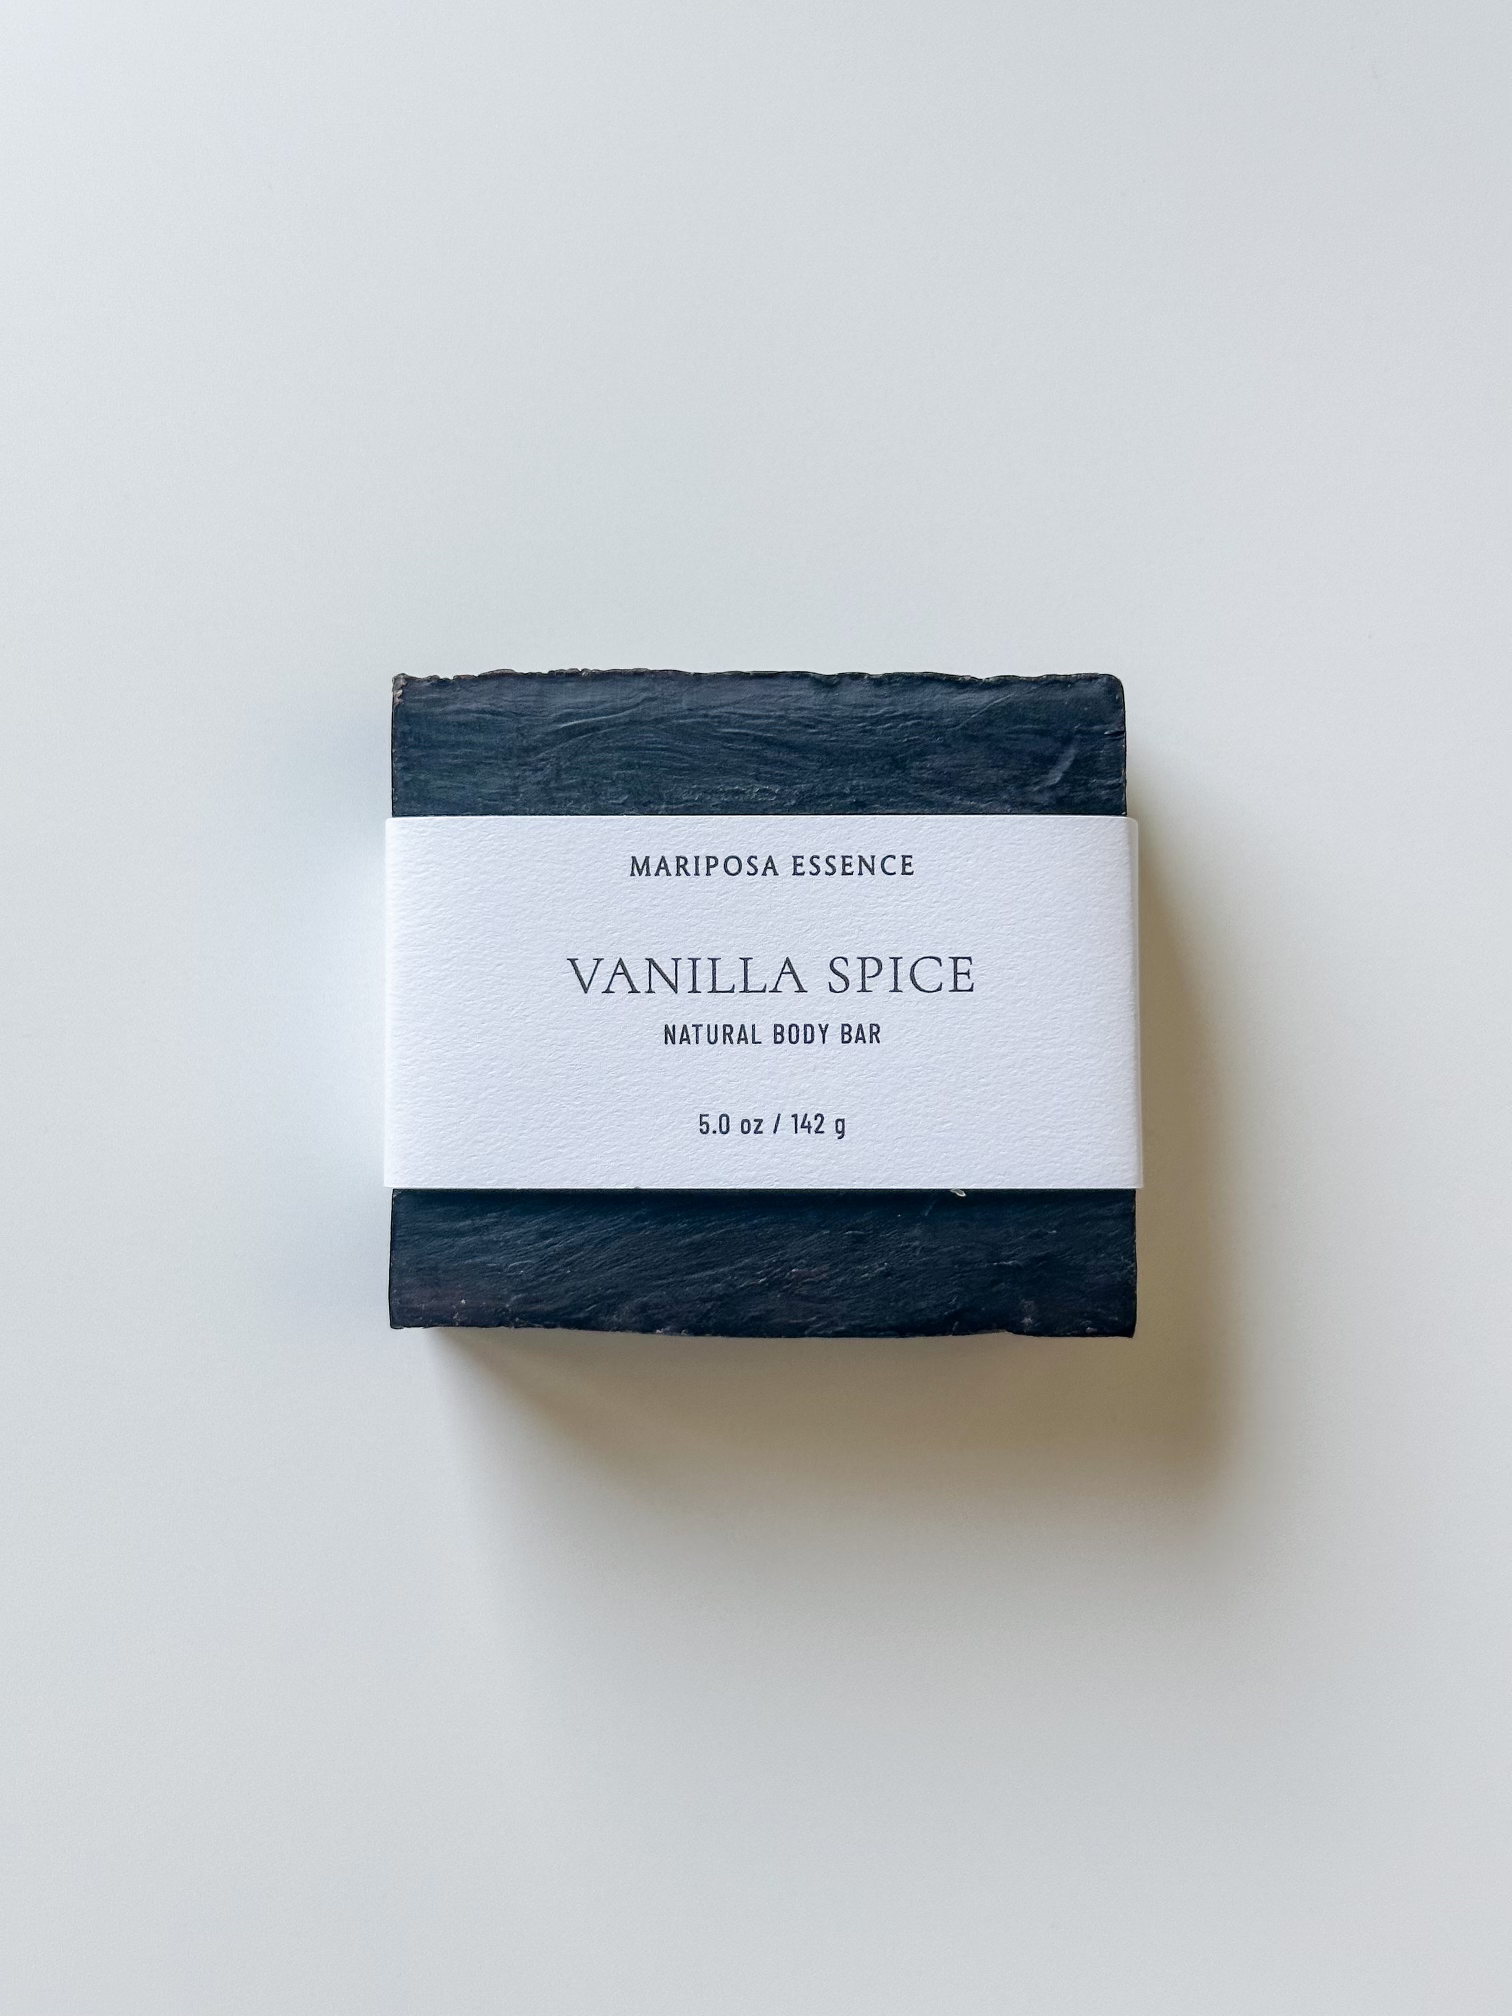 Vanilla Spice body bar